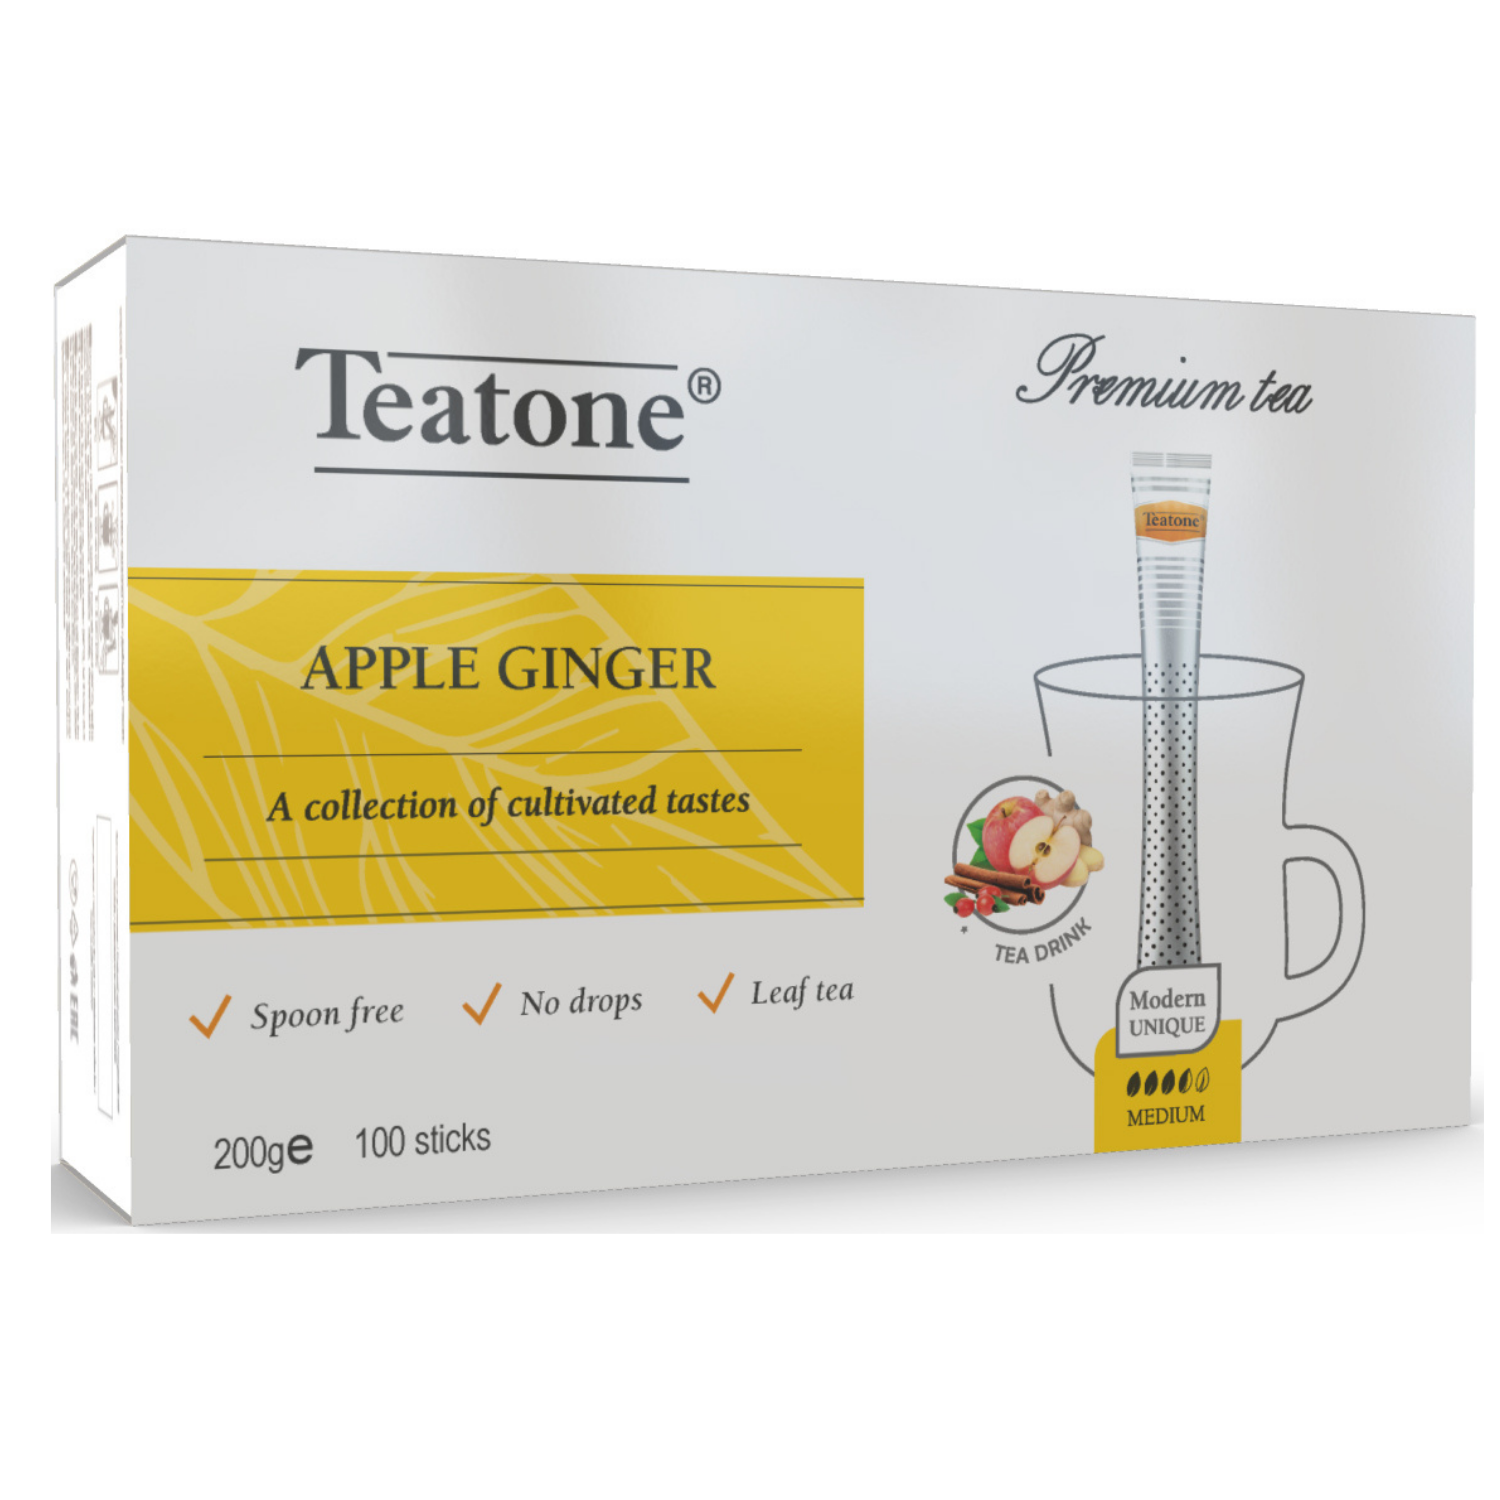 Teatone чай в стиках купить. Чай Театон. Apple Ginger чай. Чай в стиках Teatone. Фруктовый чай Teatone.